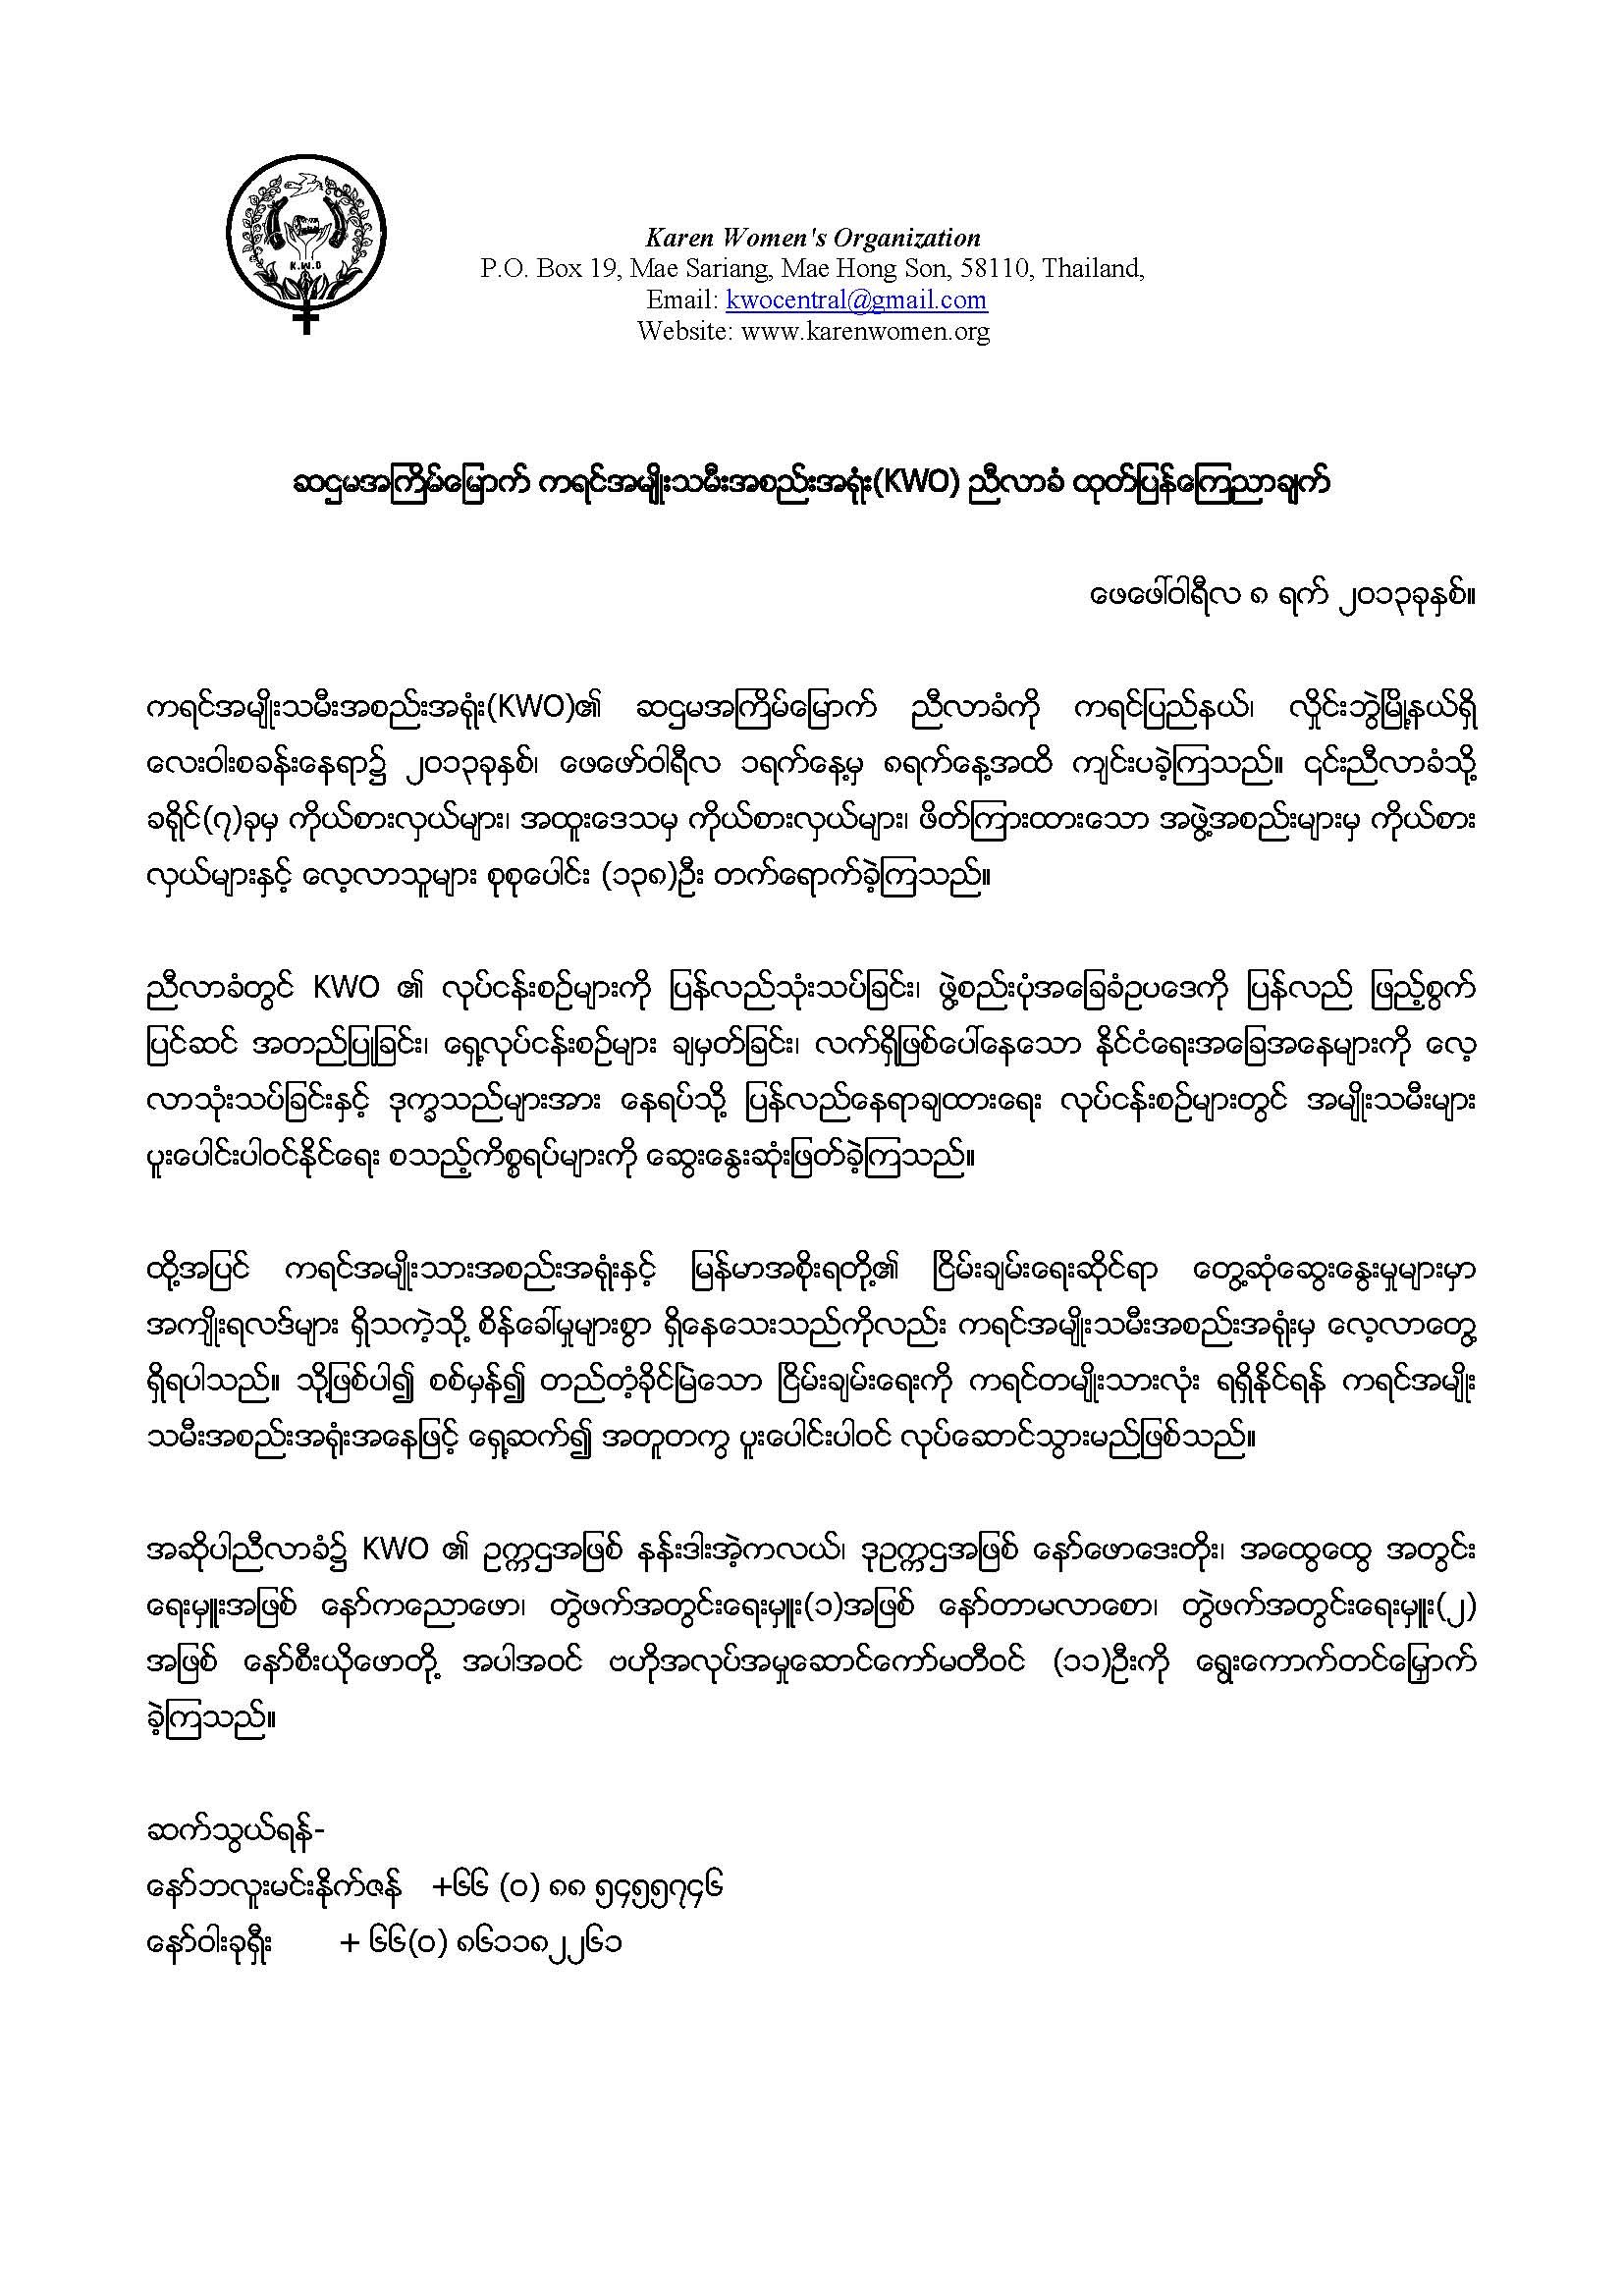 KWO 6th Congress Statement 2013 Burmese Version